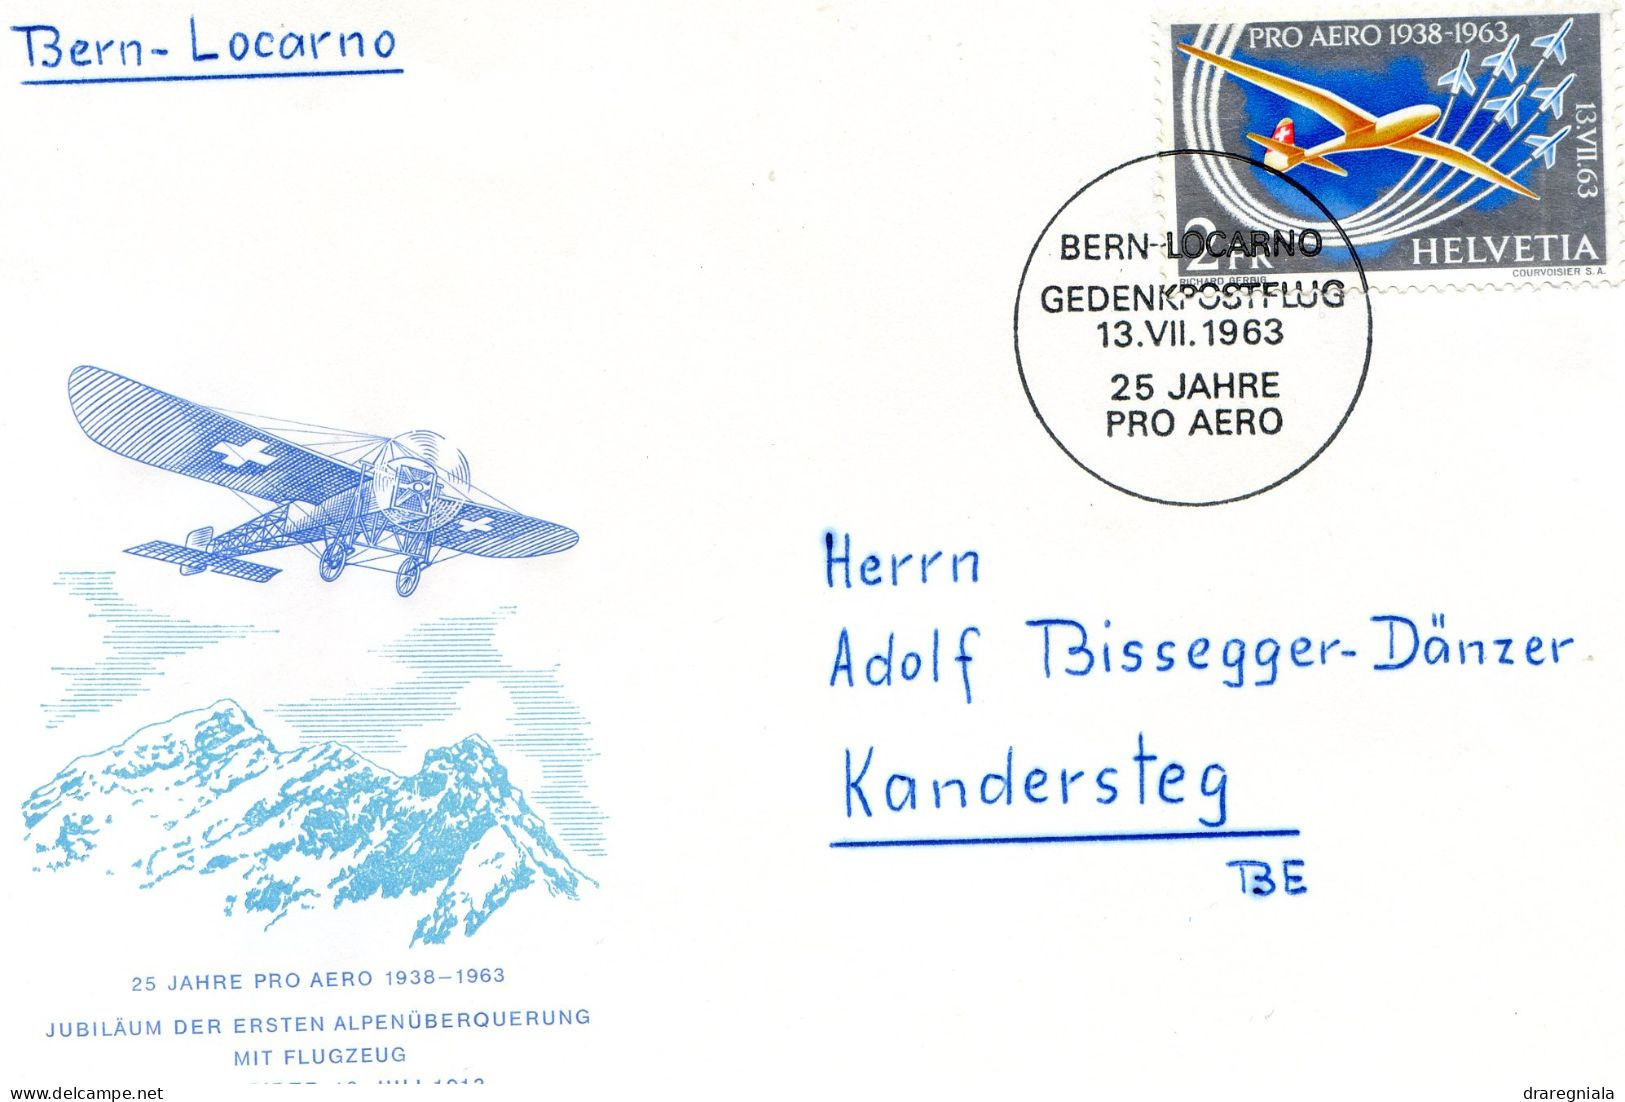 Bern - Locarno Gedenkpostflug 13 VII 1963 - 25 Jahre Pro Aero 1938 1963 - First Flight Covers